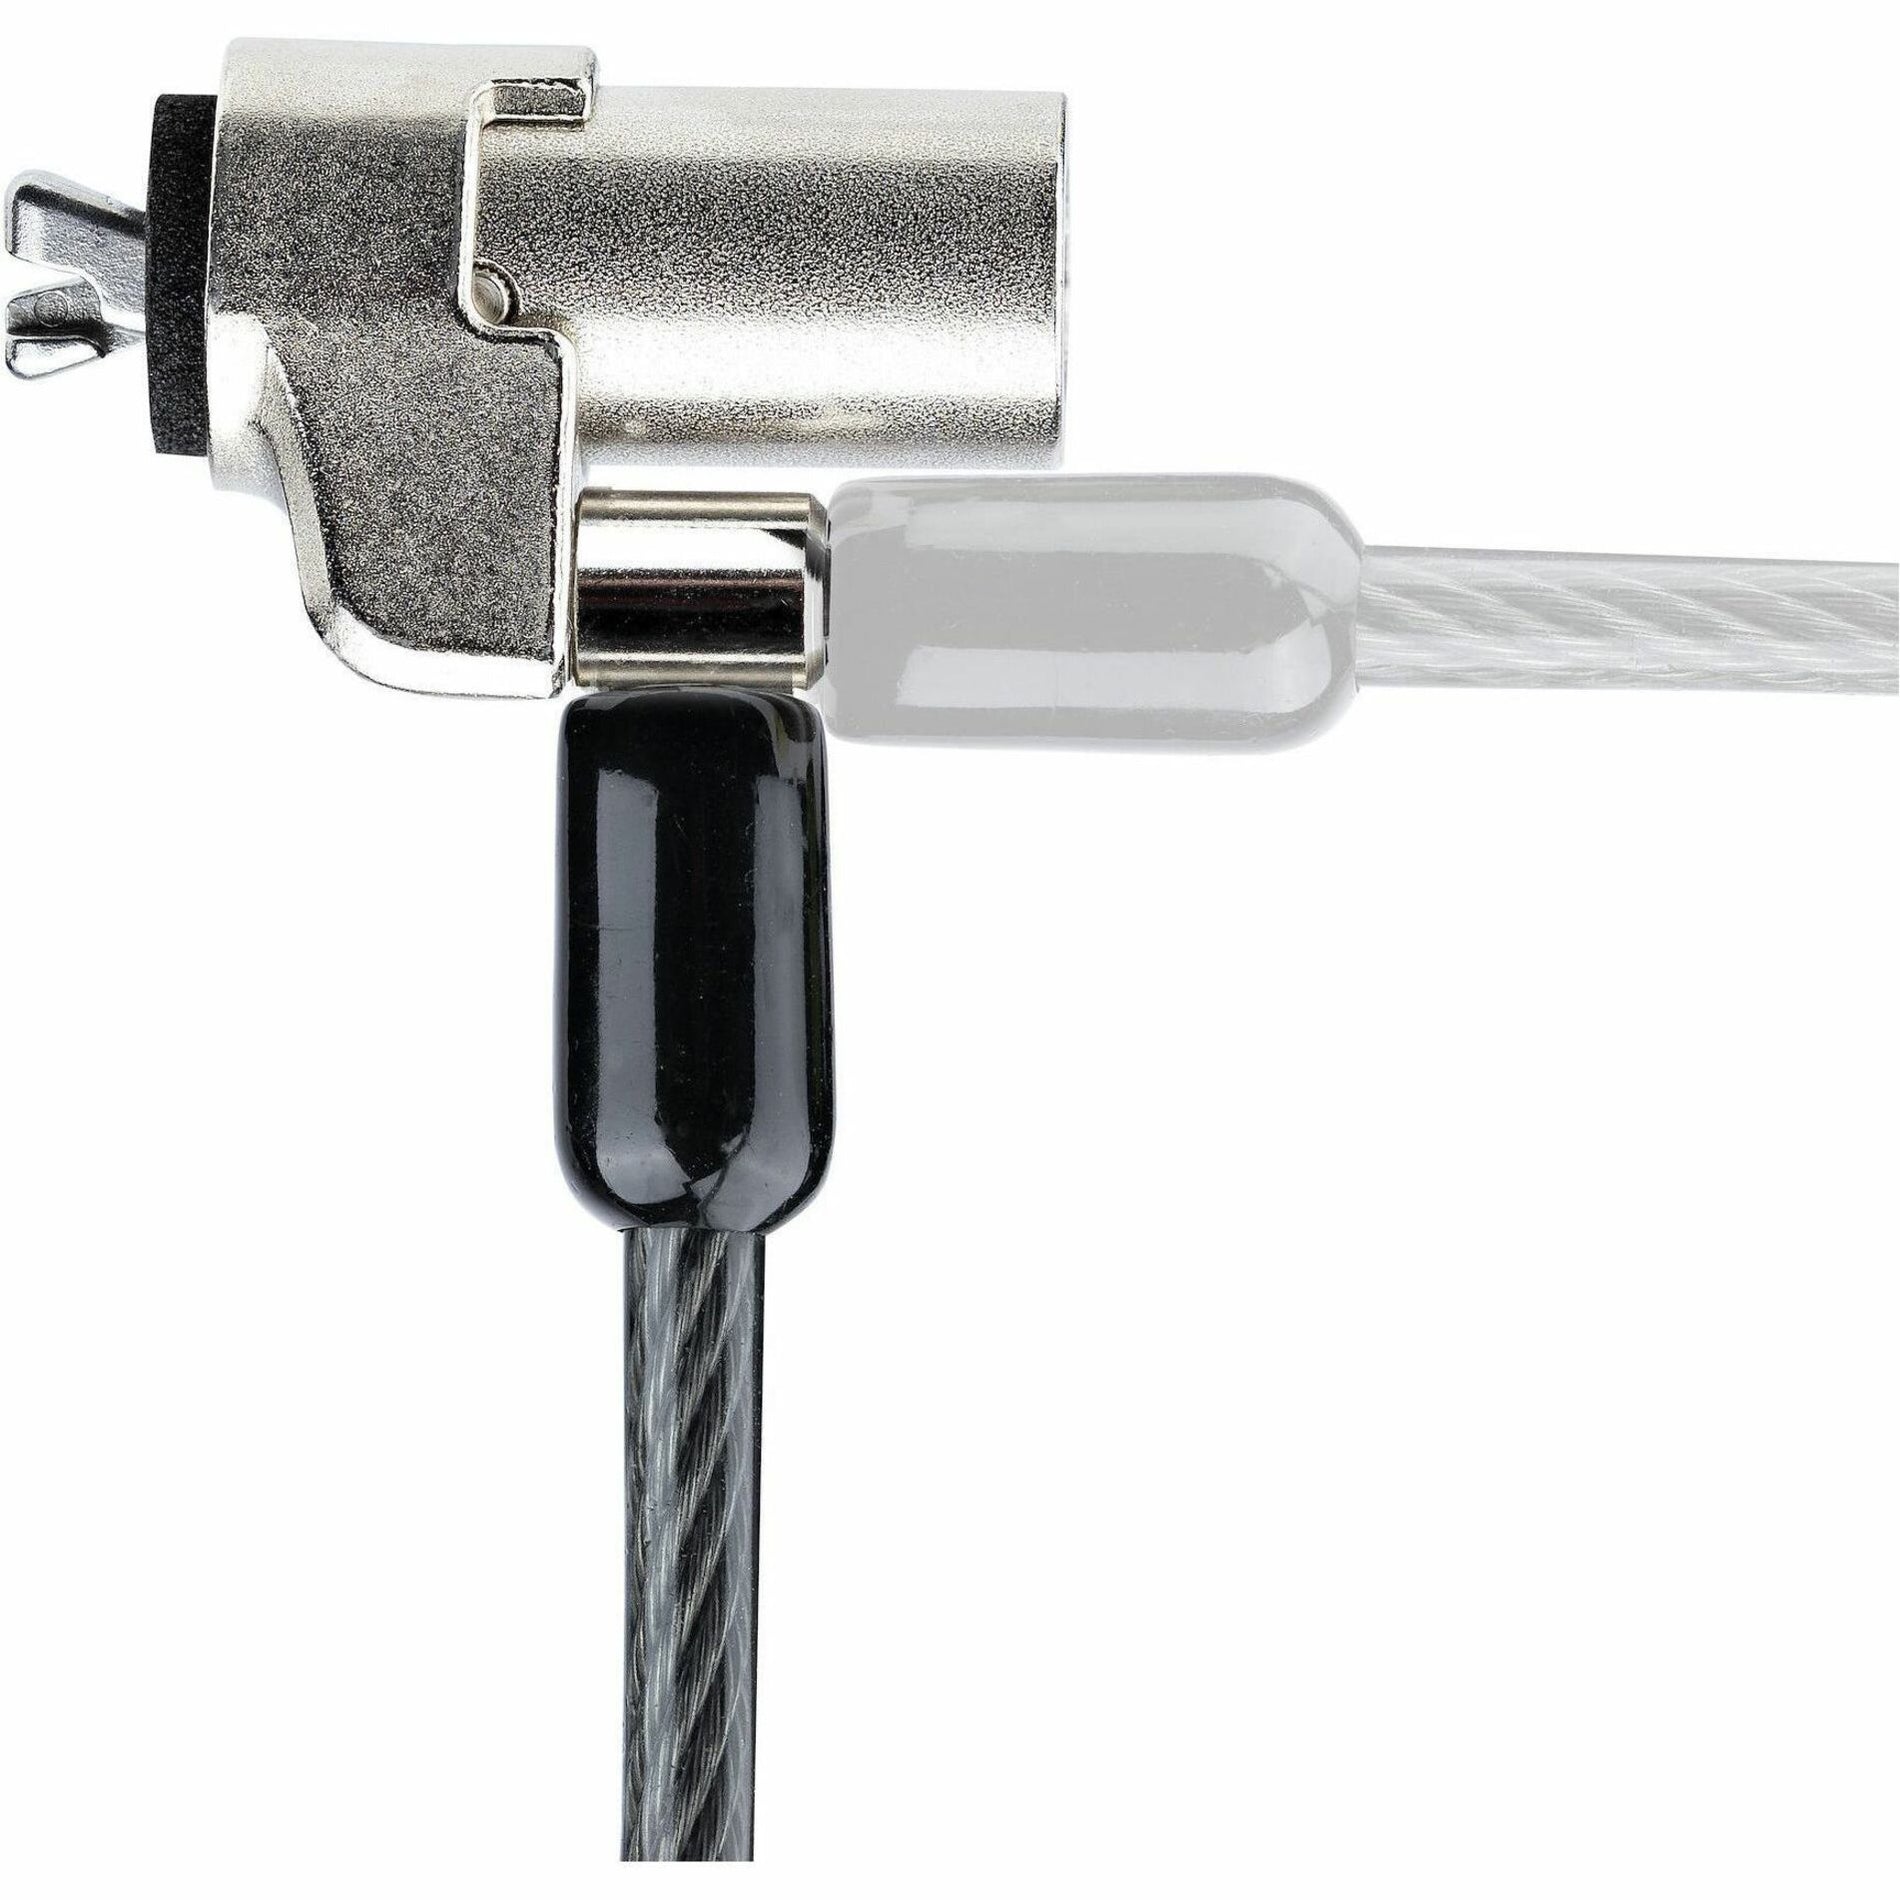 StarTech.com NBLWK-LAPTOP-LOCK Cable Lock, 6.50 ft Combination Lock, 2 Year Warranty, Tablet, Chromebook, Notebook